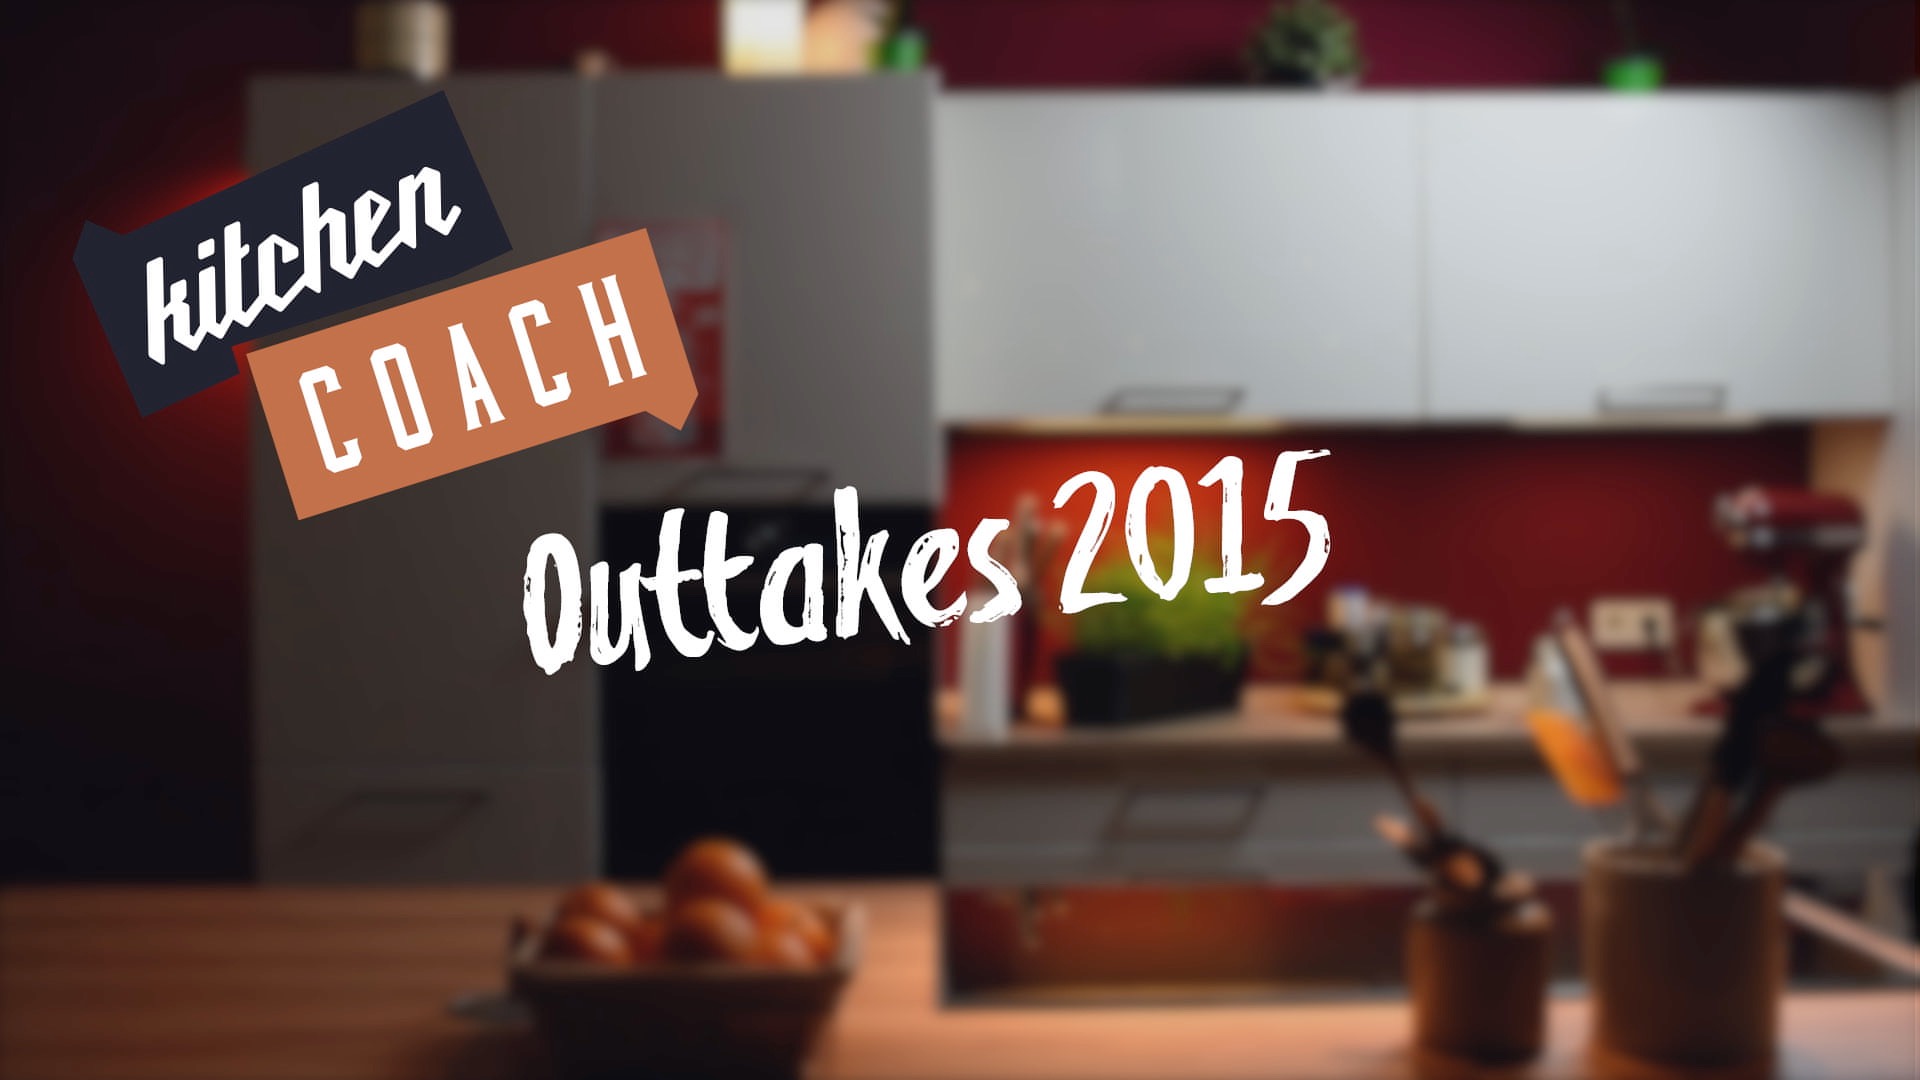 Kitchencoach Outtakes 2015